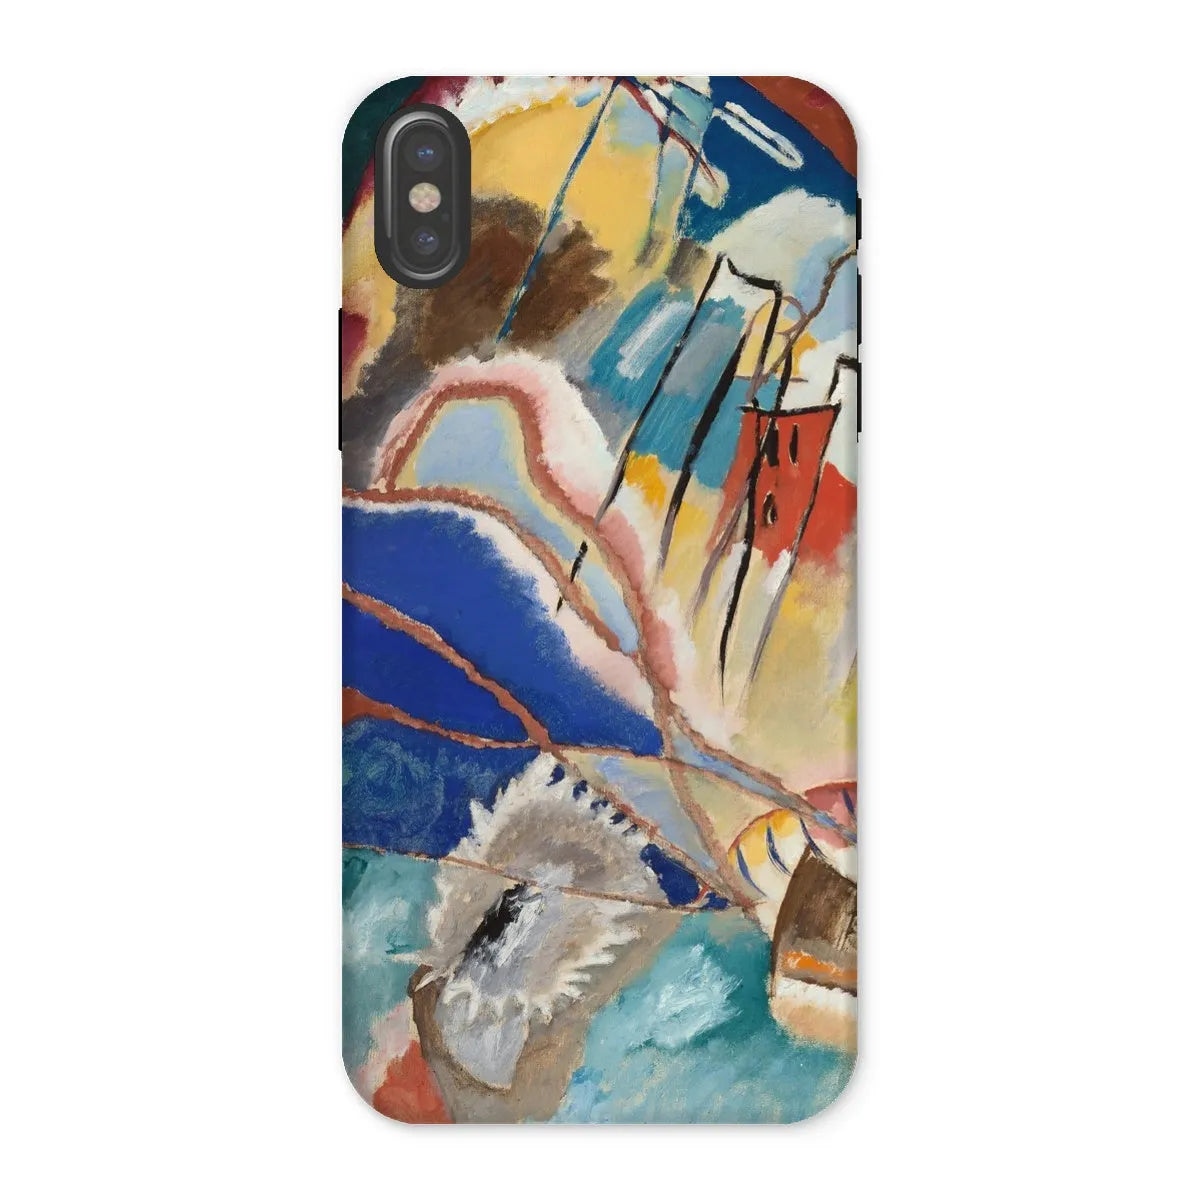 Improvisation No. 30 Art Phone Case - Wassily Kandinsky - Iphone x / Matte - Mobile Phone Cases - Aesthetic Art